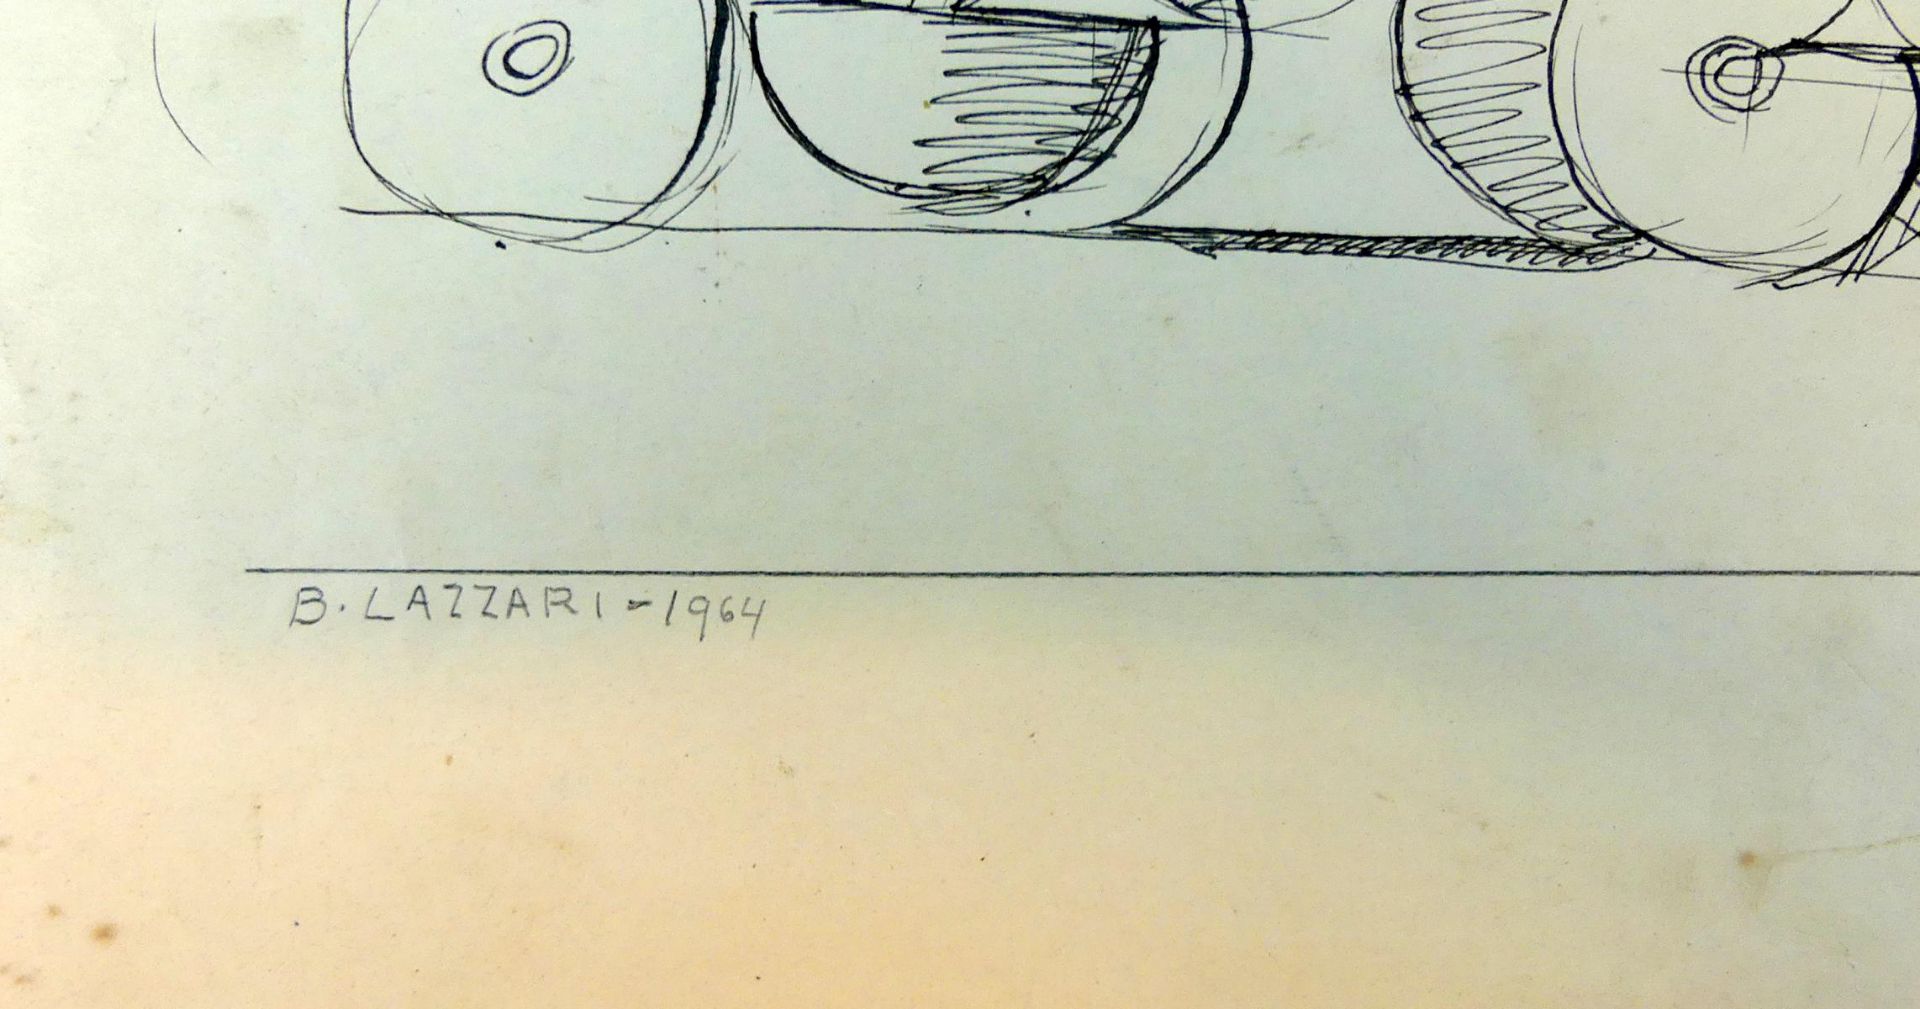 B-LAZZARI, "Abstrakt", Zeichnung, u.li.sig, dat. 1964, fleckig, ca. 30 x 21 cm - Bild 2 aus 2